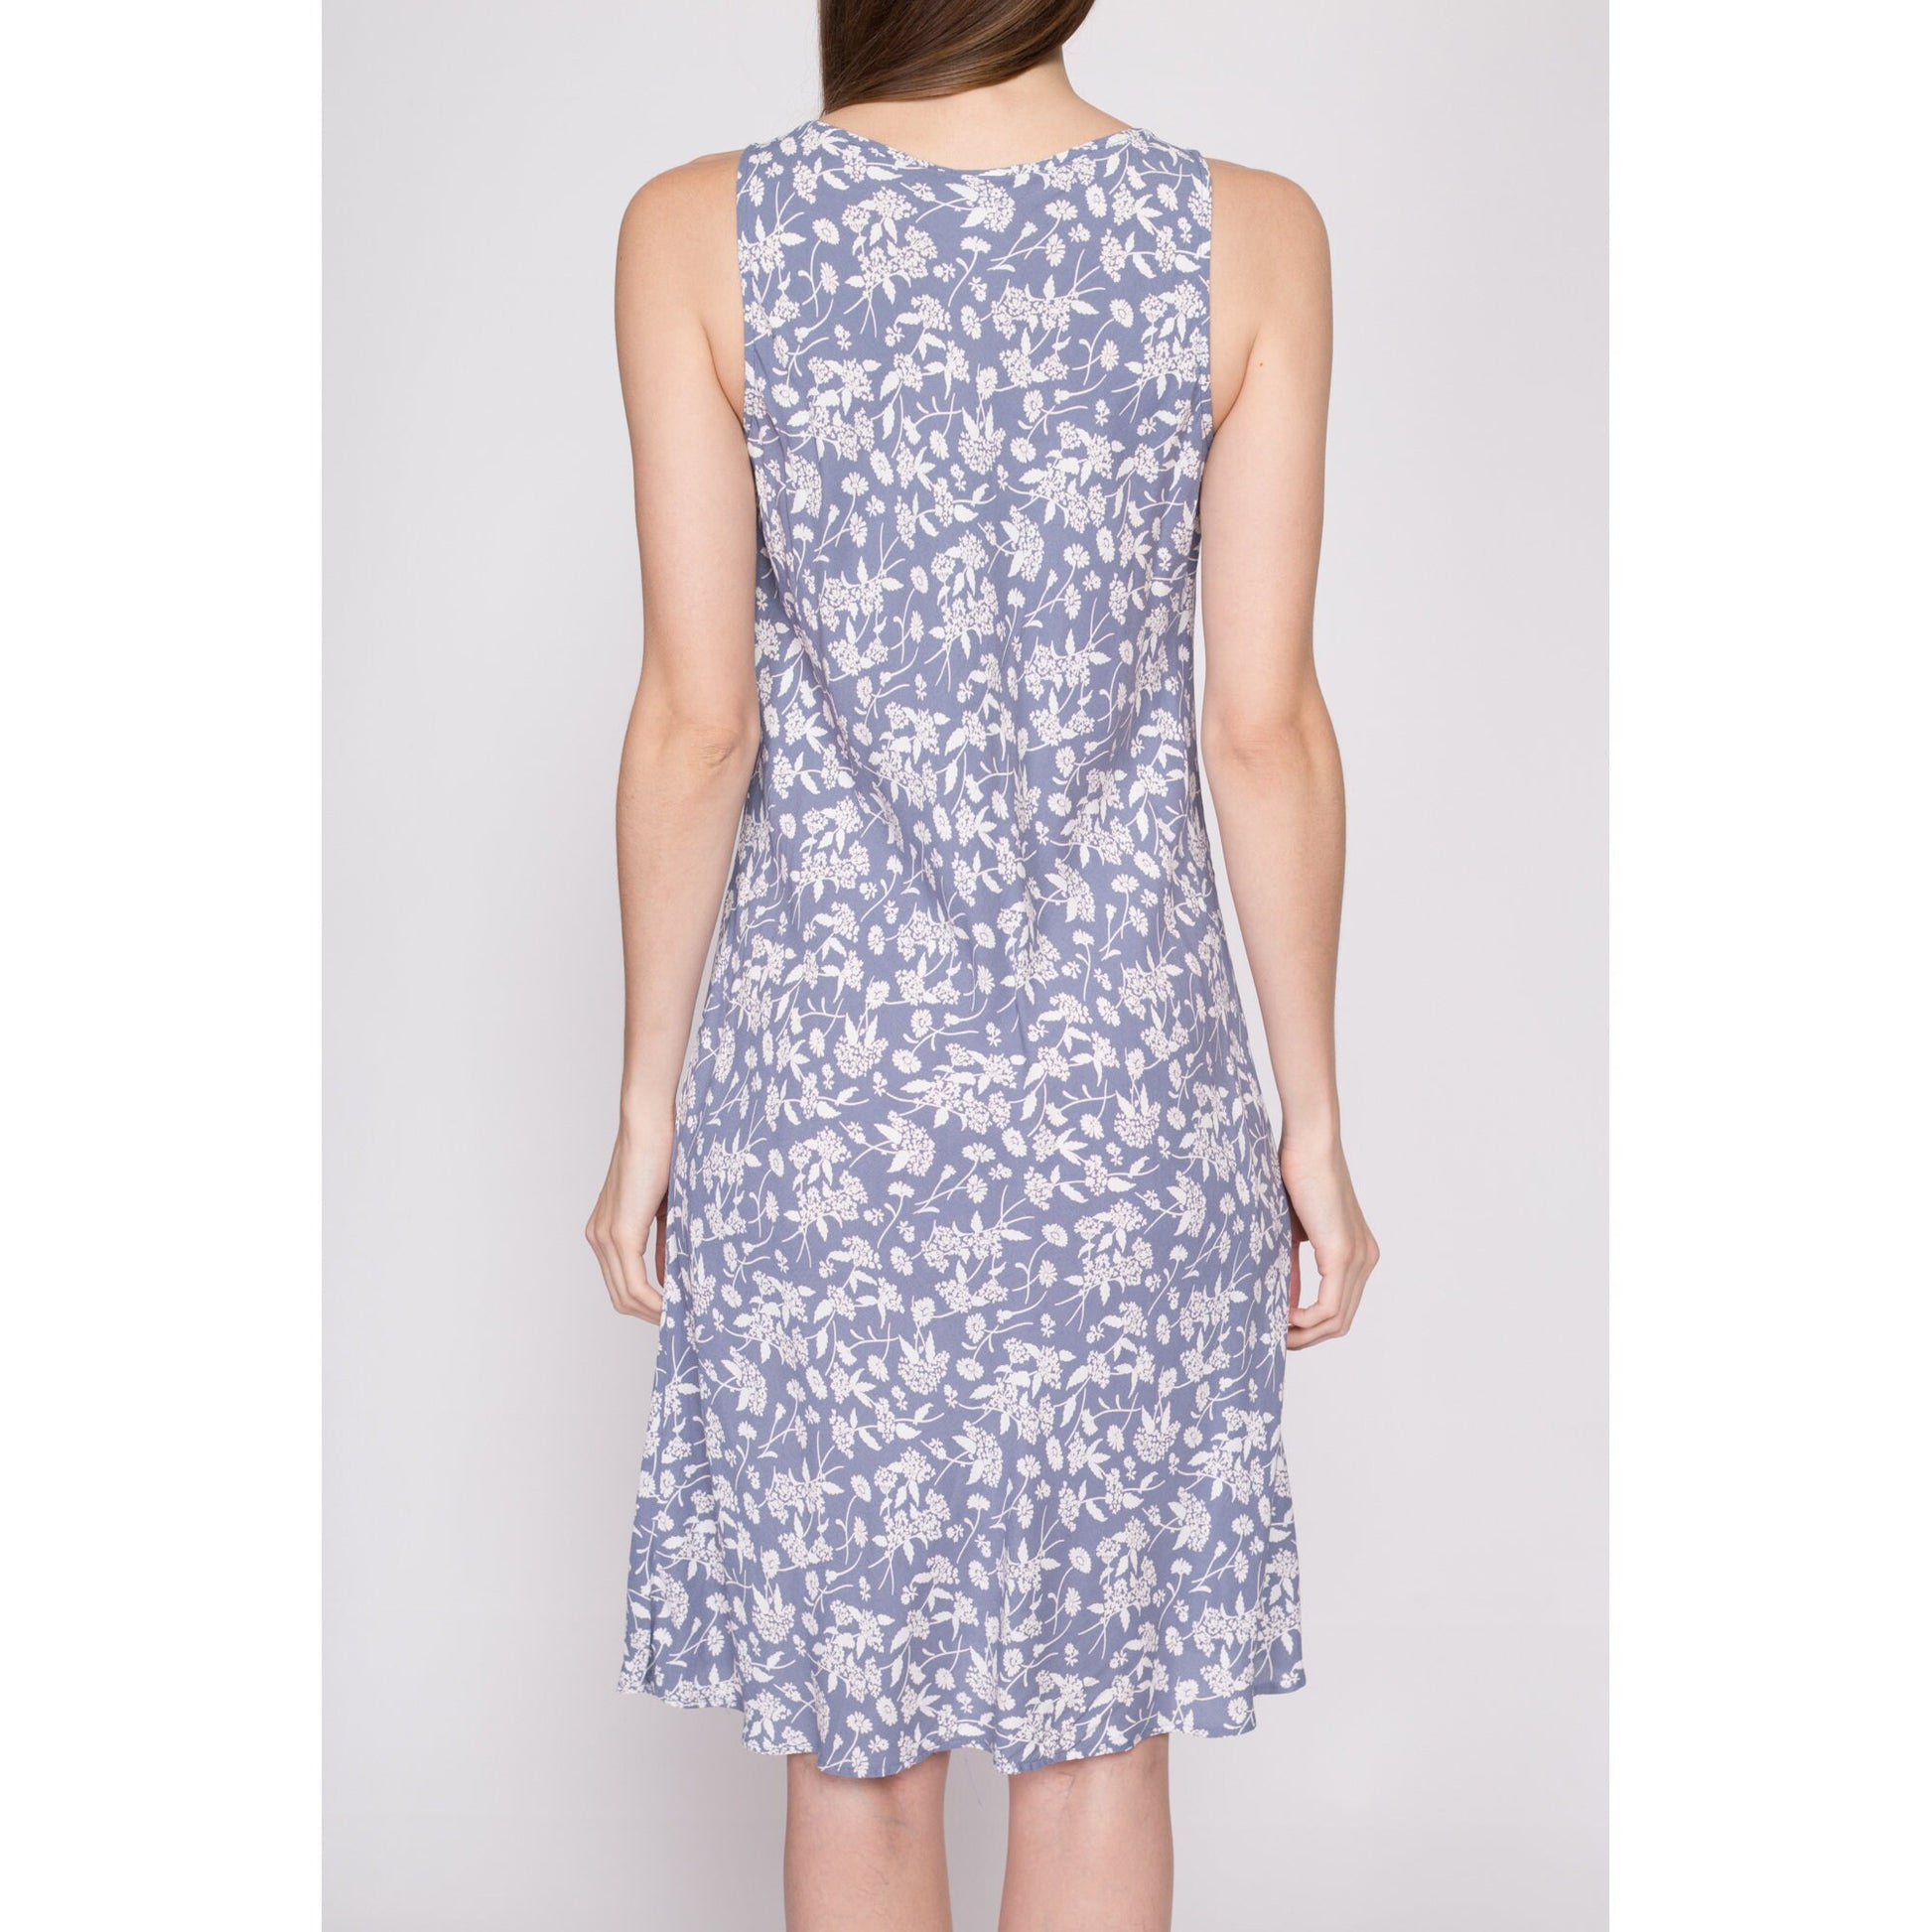 M| Vintage Laura Ashley Floral Sundress - Medium | 90s Y2K Periwinkle Blue Bias Cut Sleeveless Tank Dress